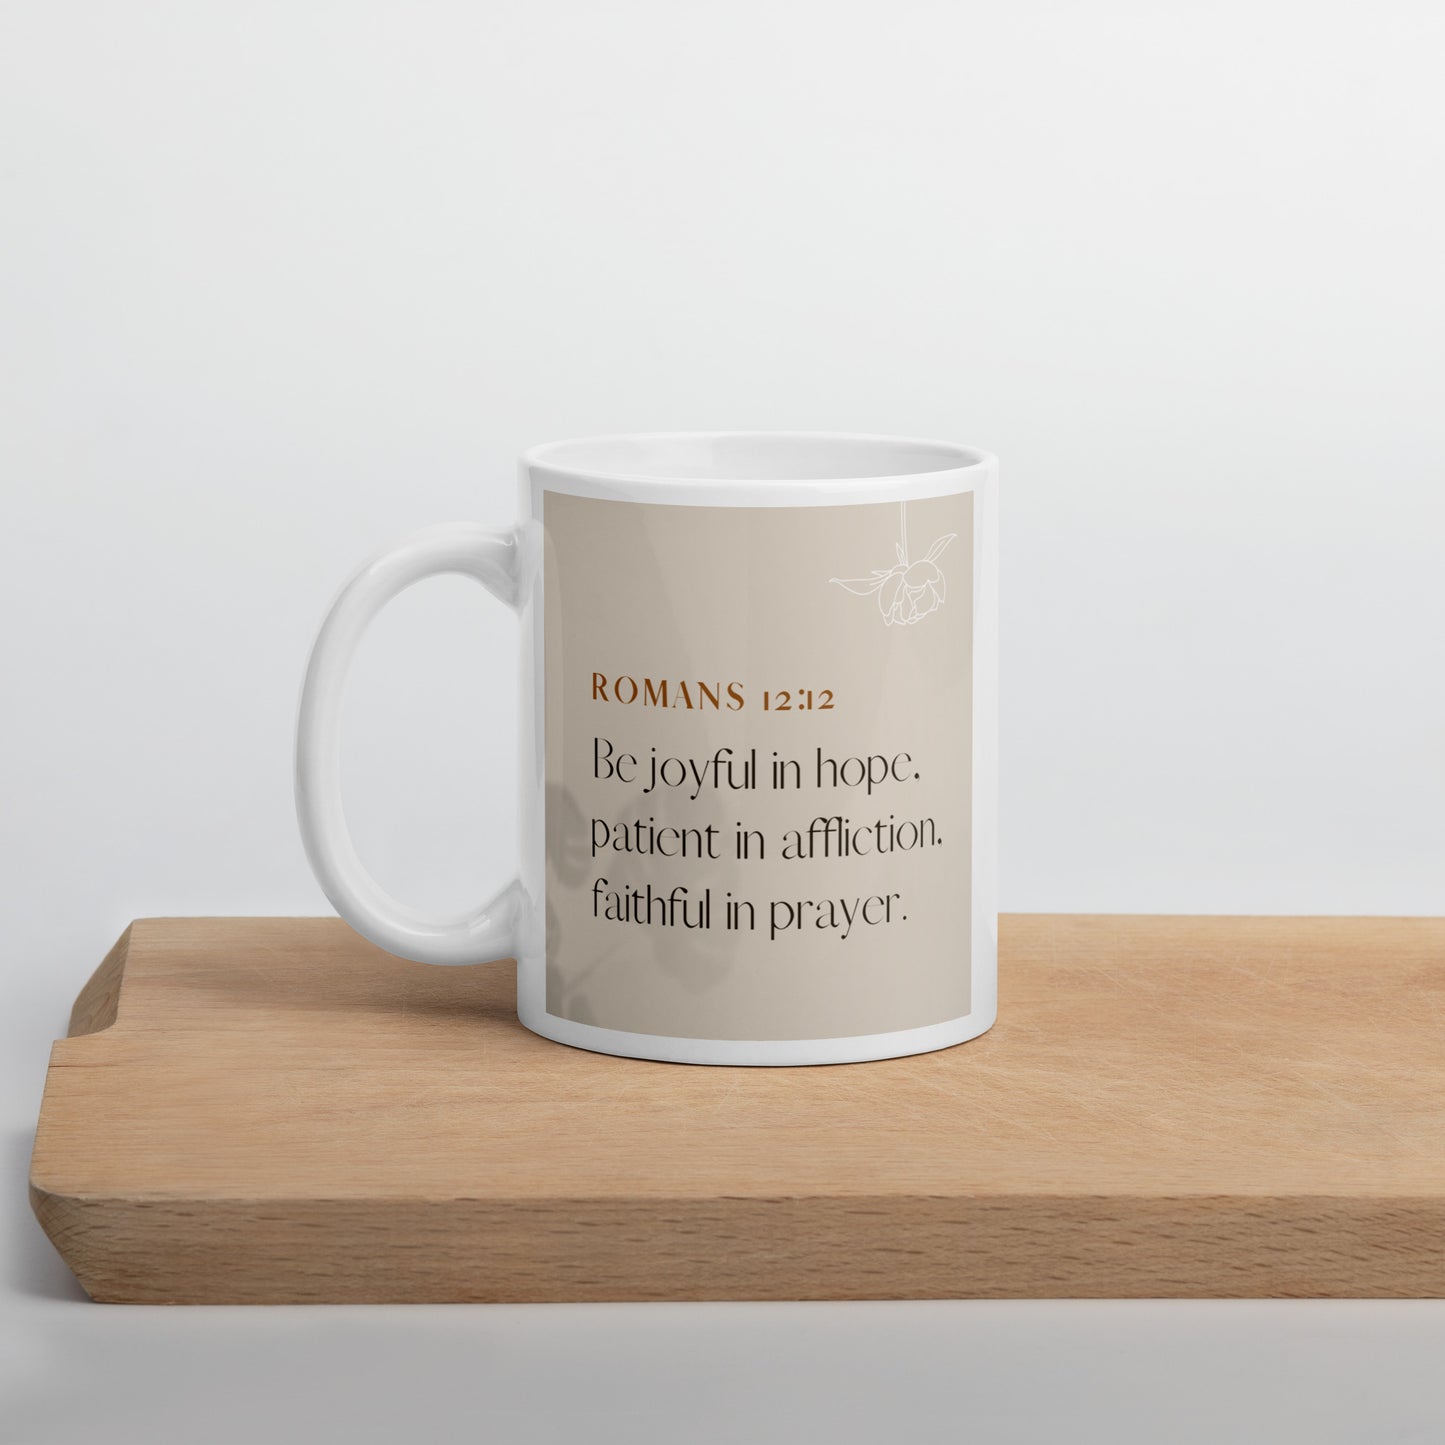 Romans 12:12 White glossy mug